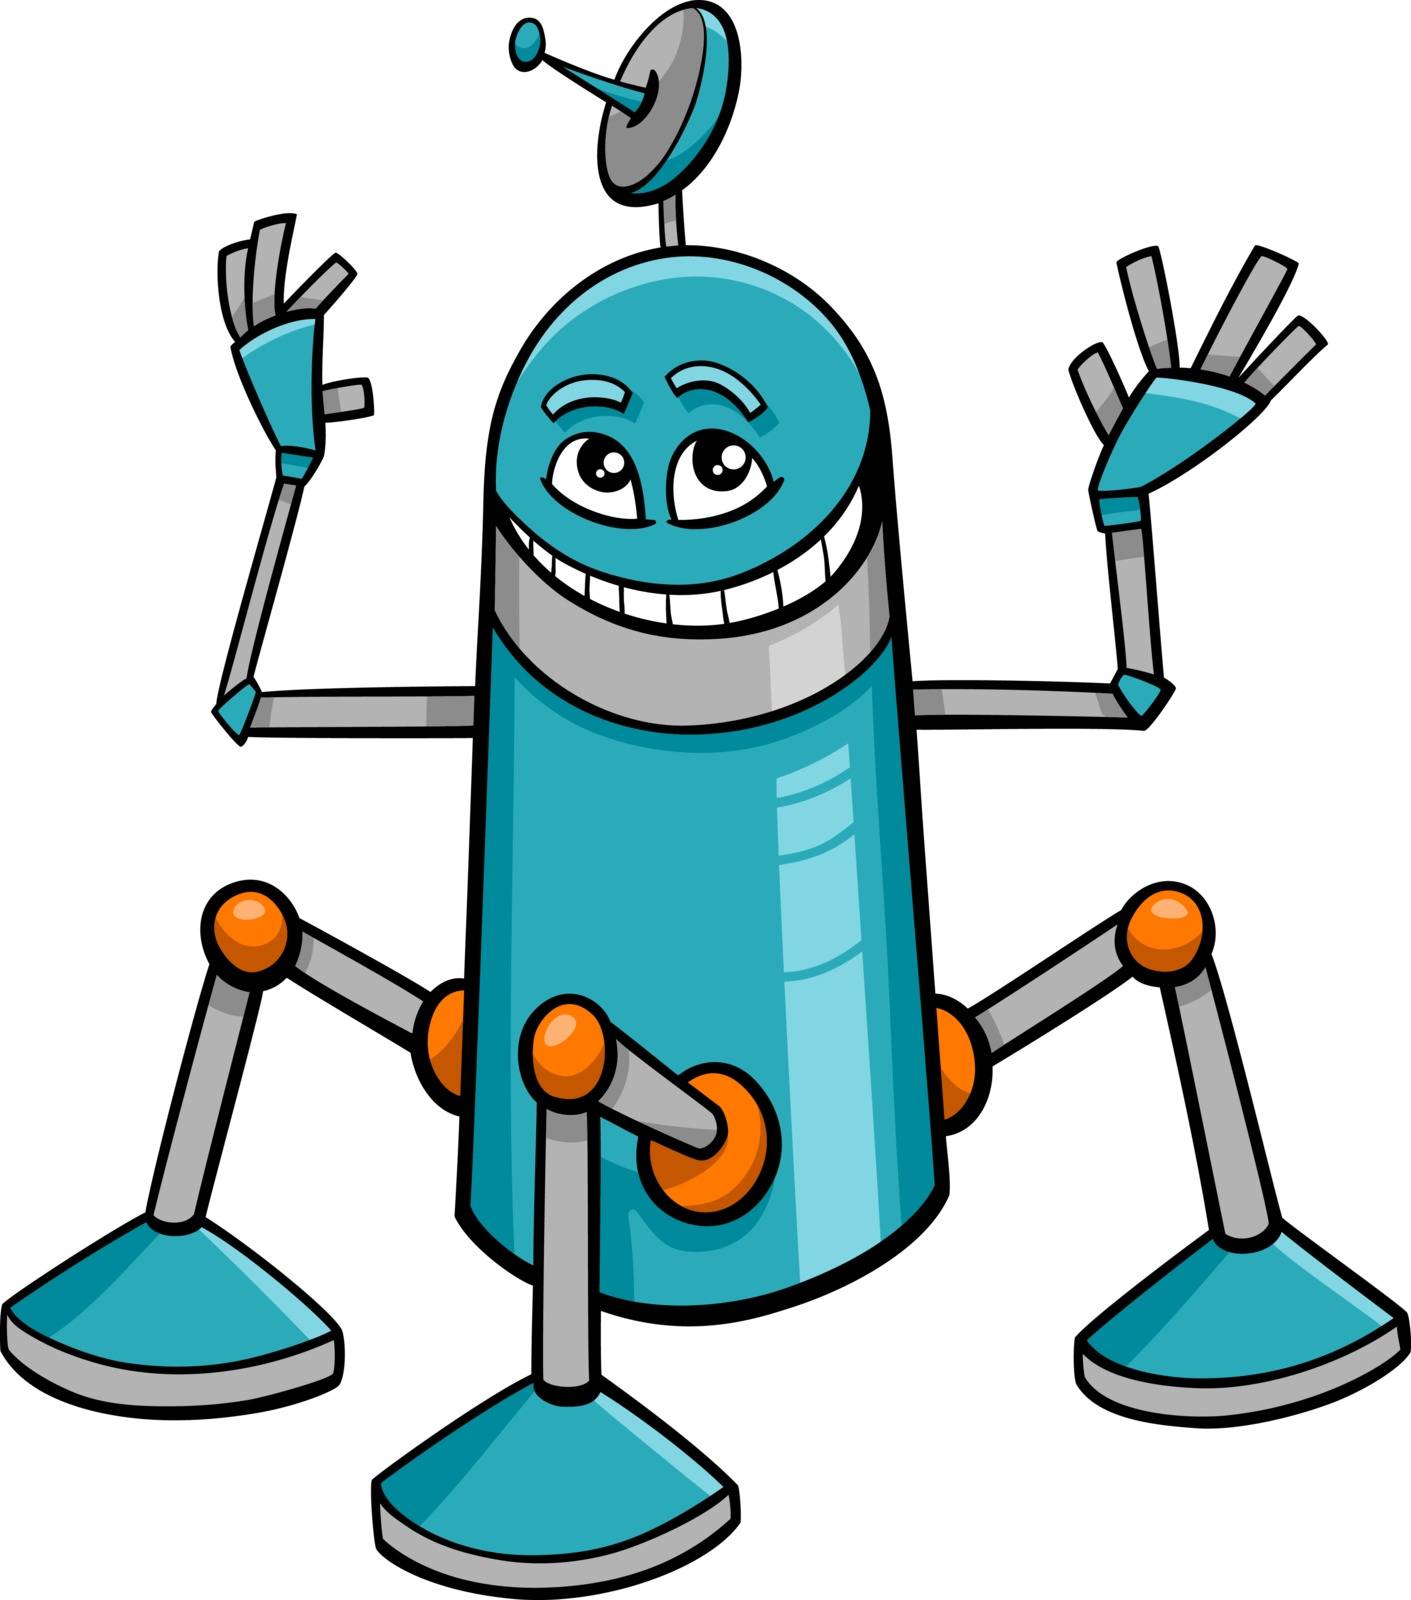 Cartoon Illustration of Funny Robot Comic Character